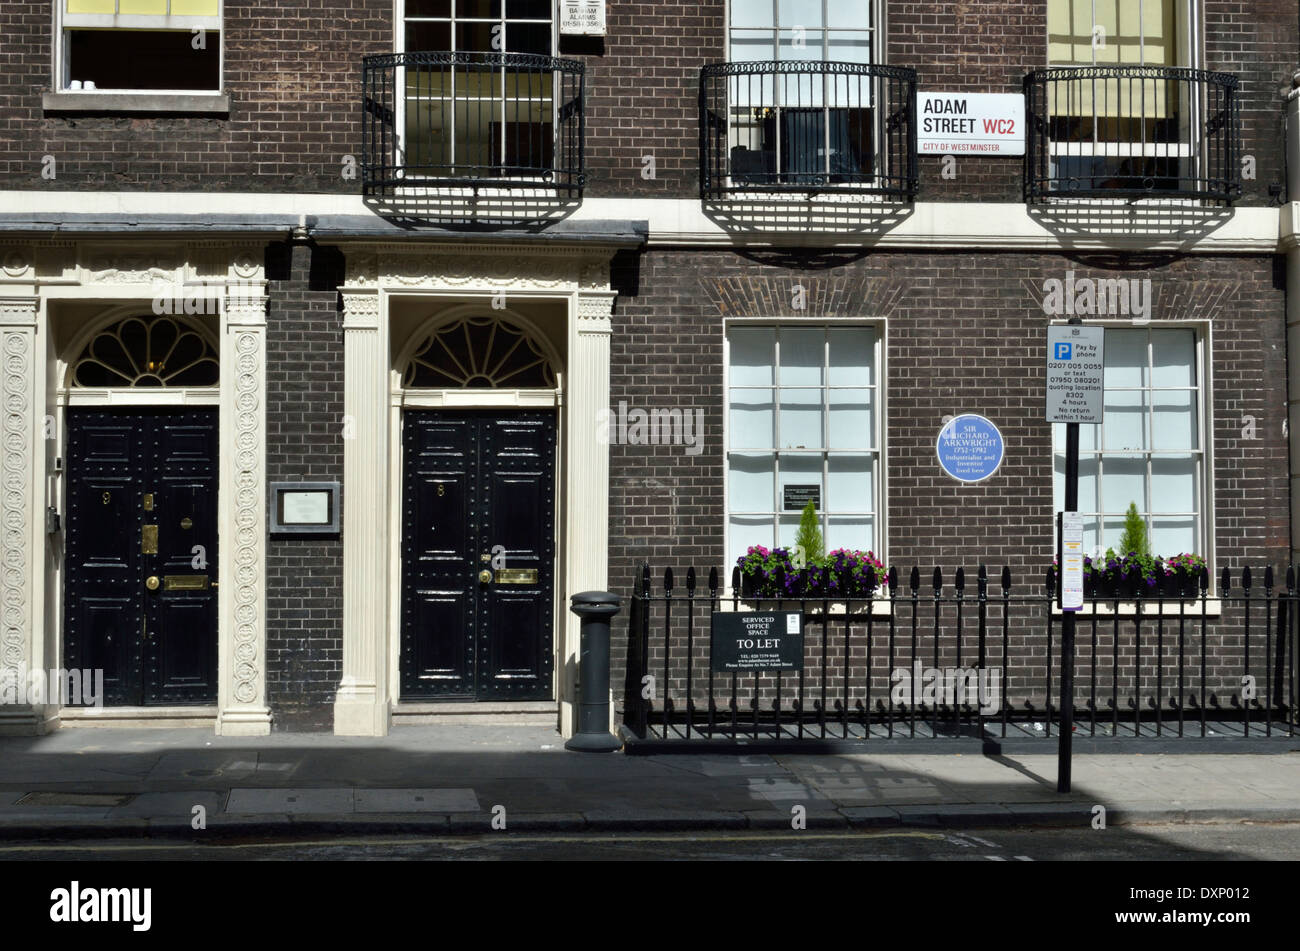 Houses in Adam Street WC2, London, UK. Stock Photo